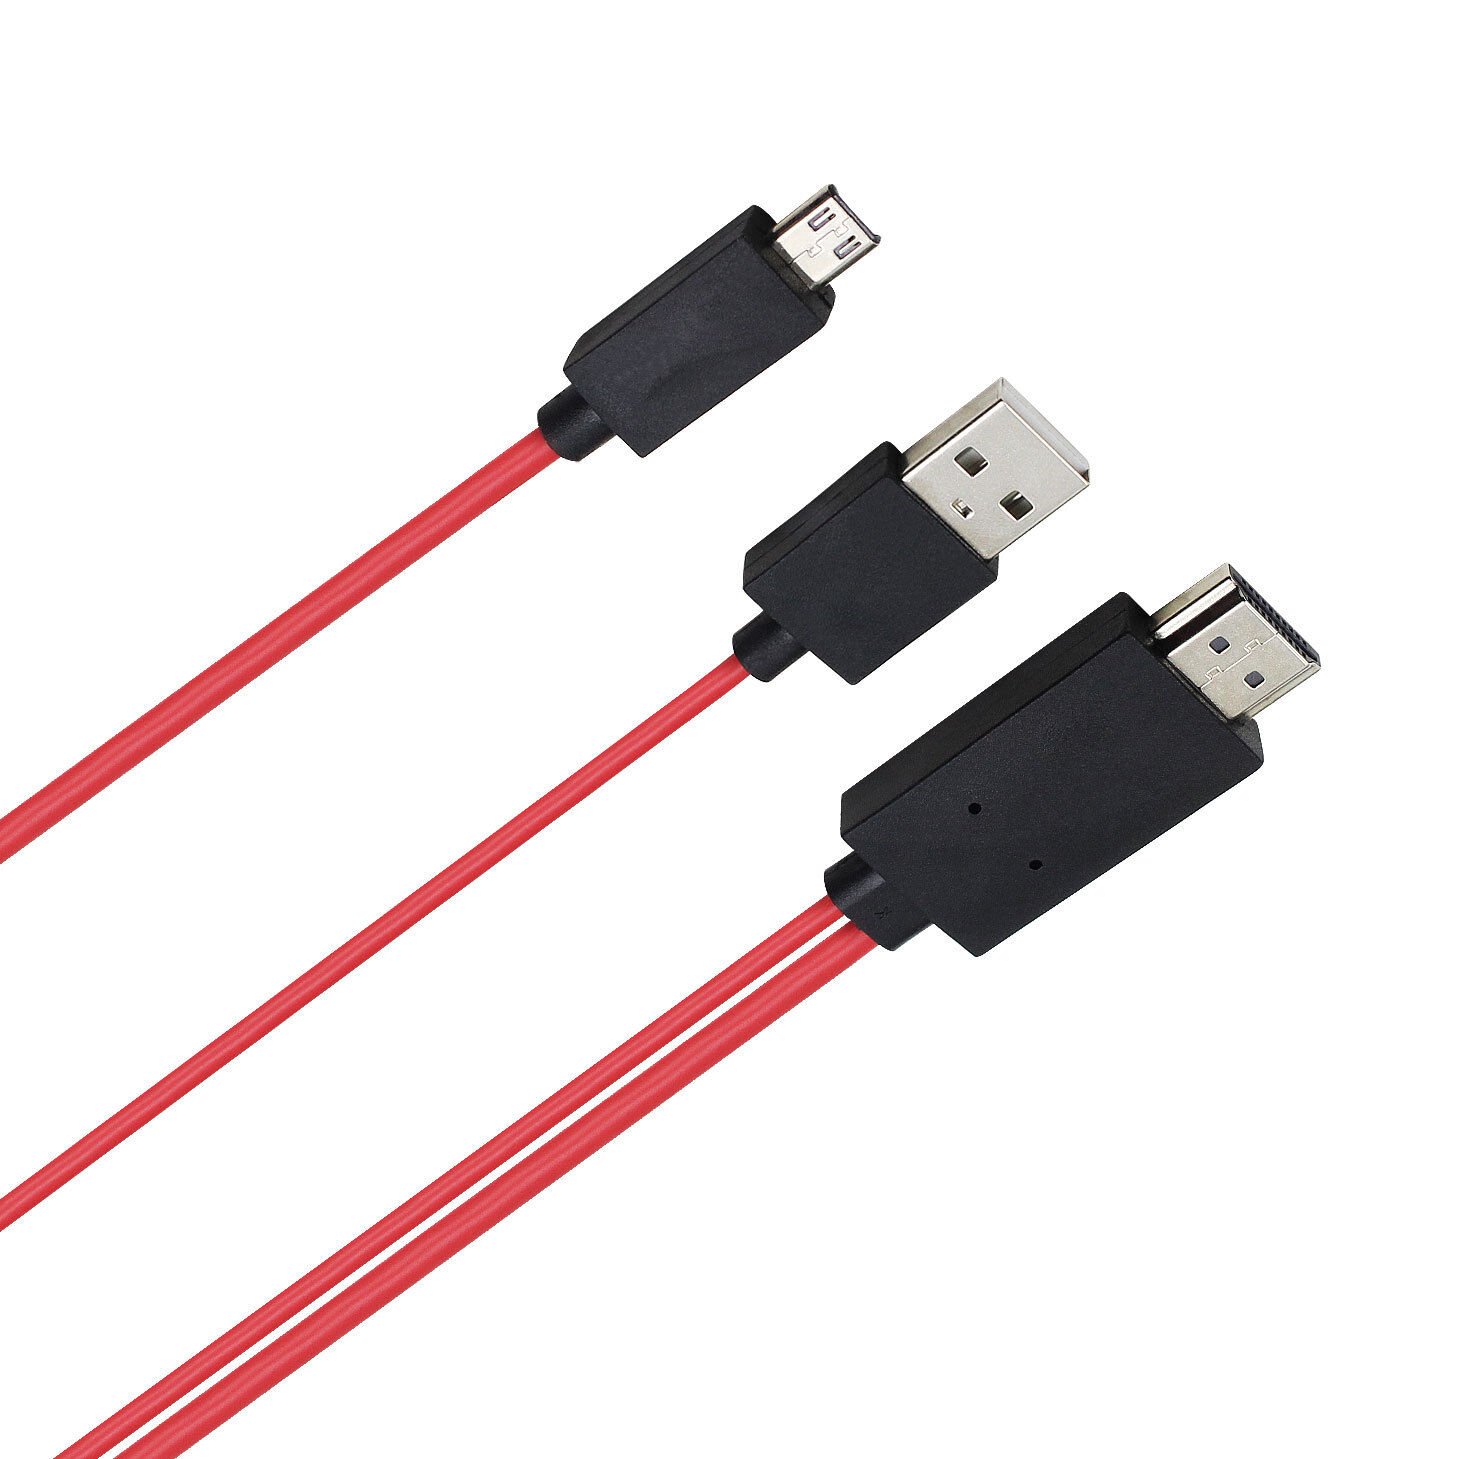 MHL USB HDMI AV TV Cable Adapter Cord For Samsung Galaxy Tab Pro 8.4 SM-T320